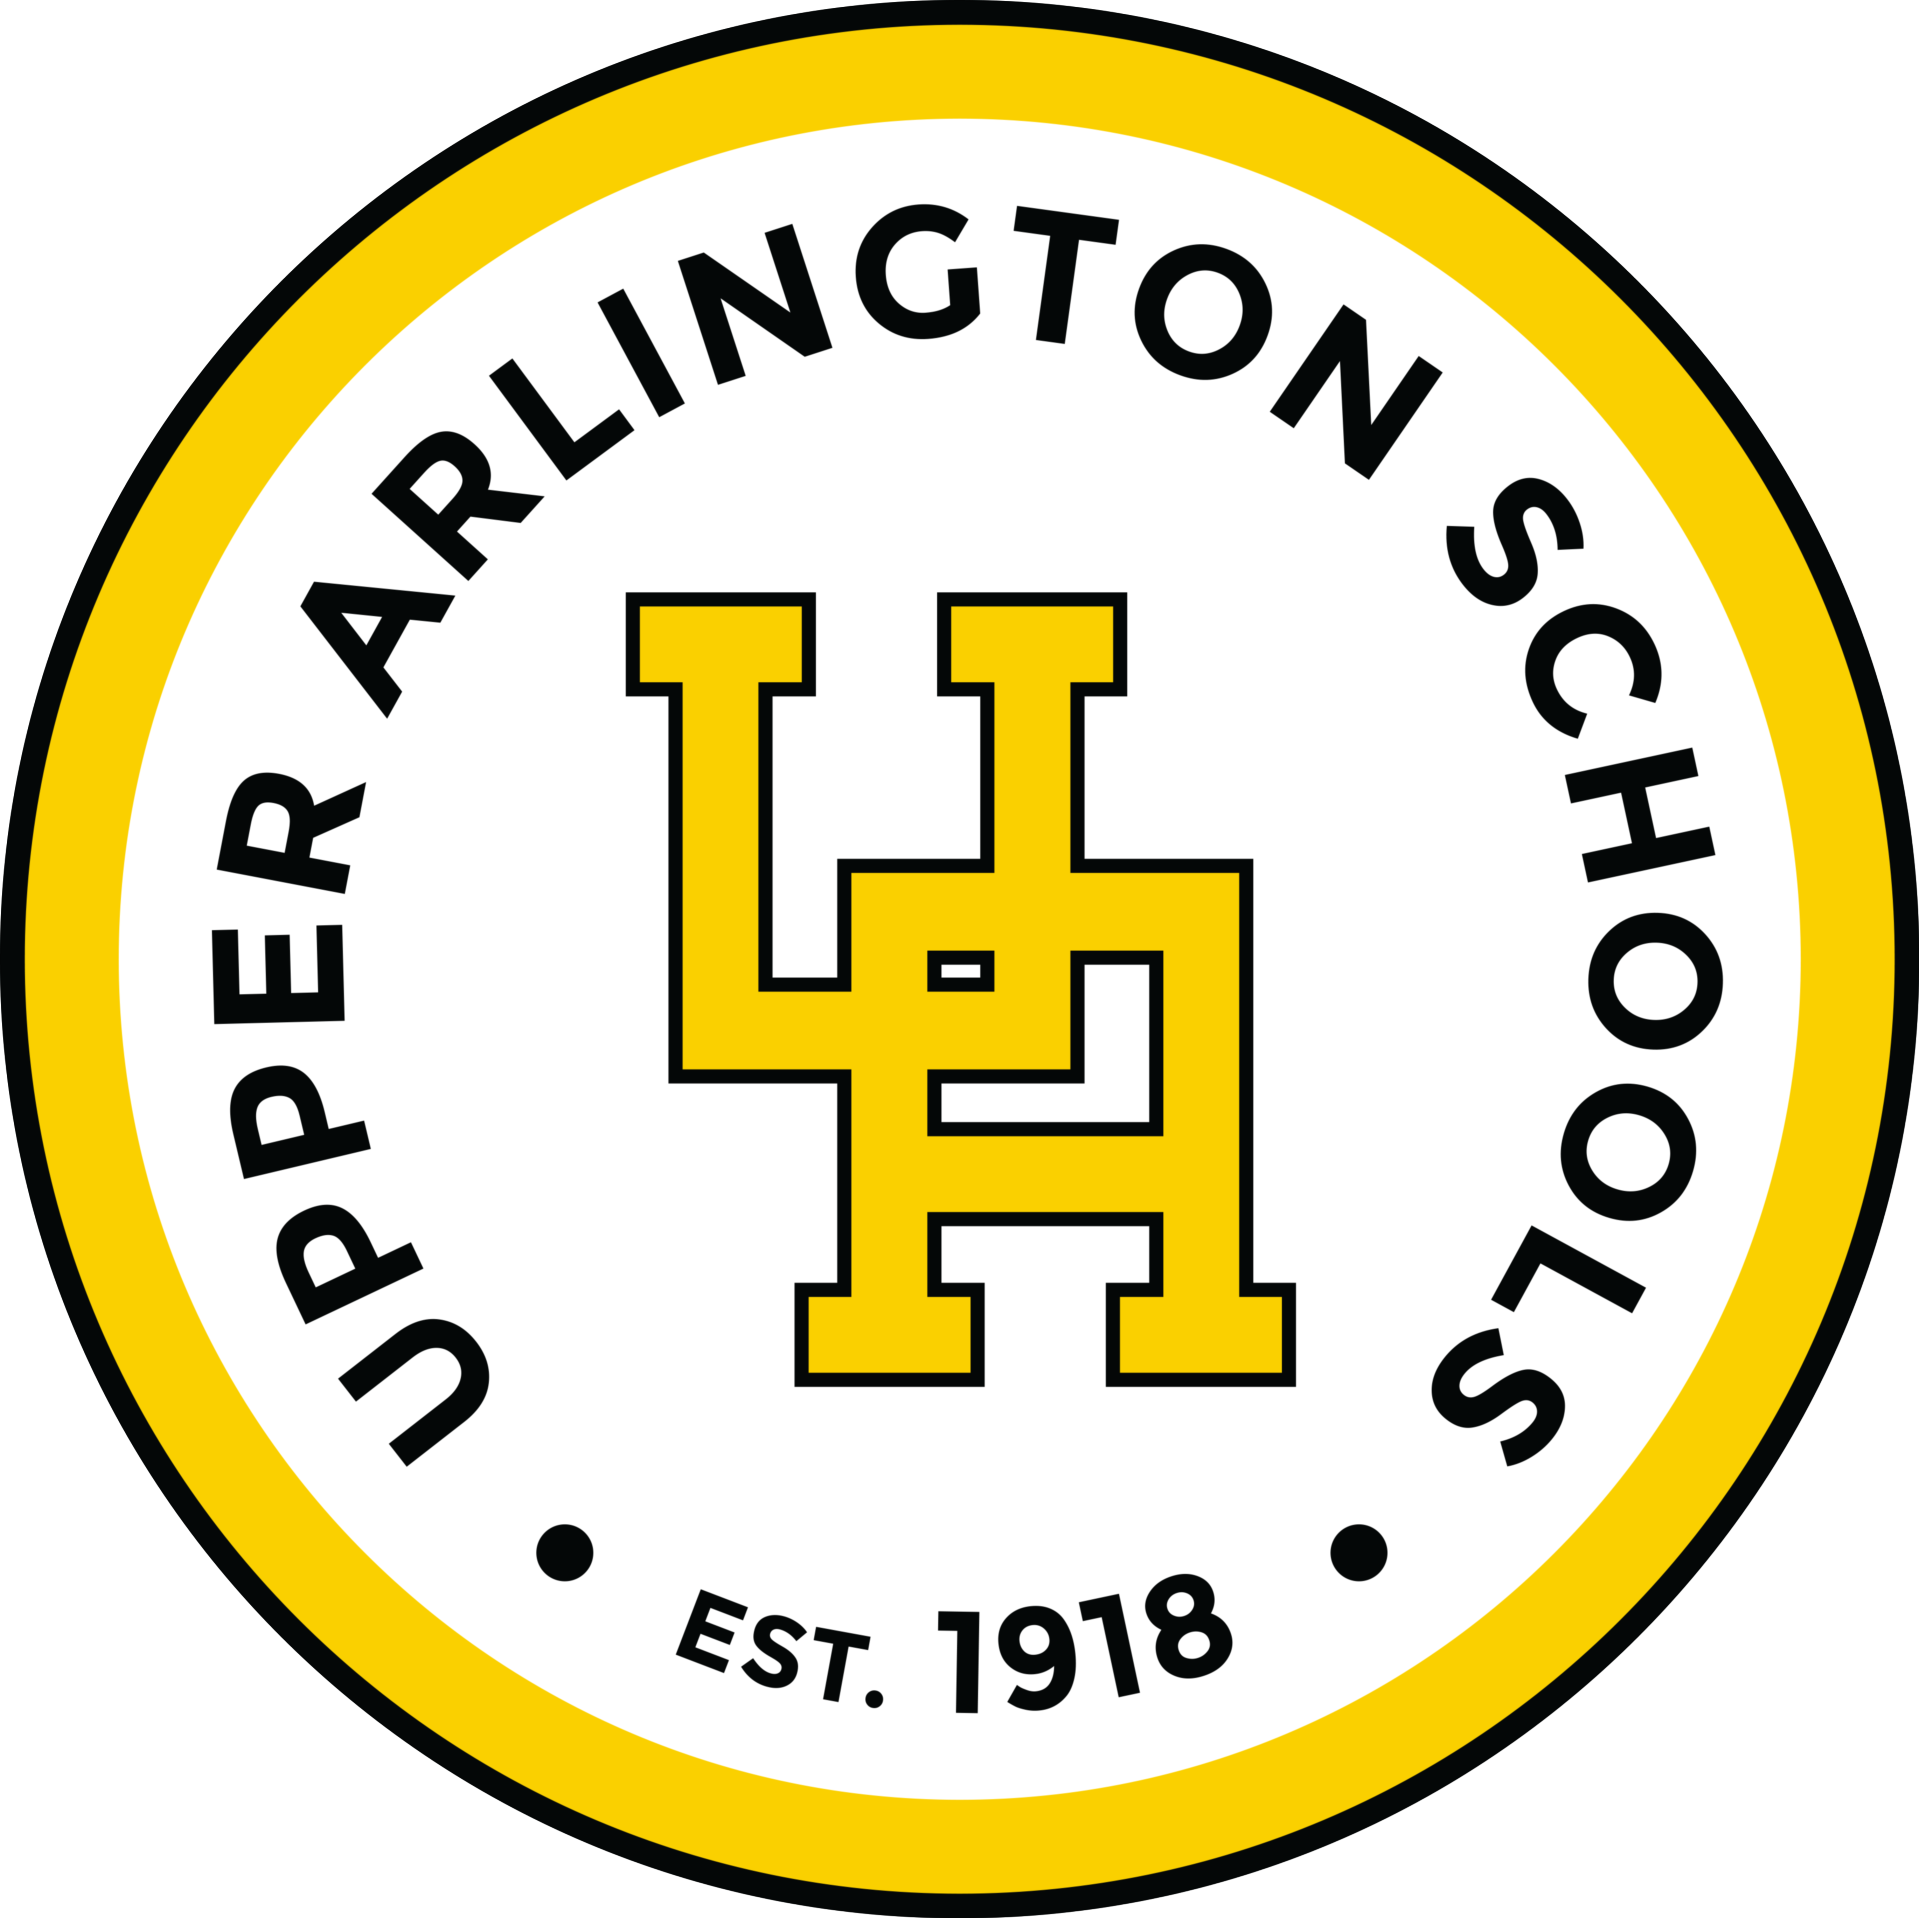 Upper Arlington Schools logo